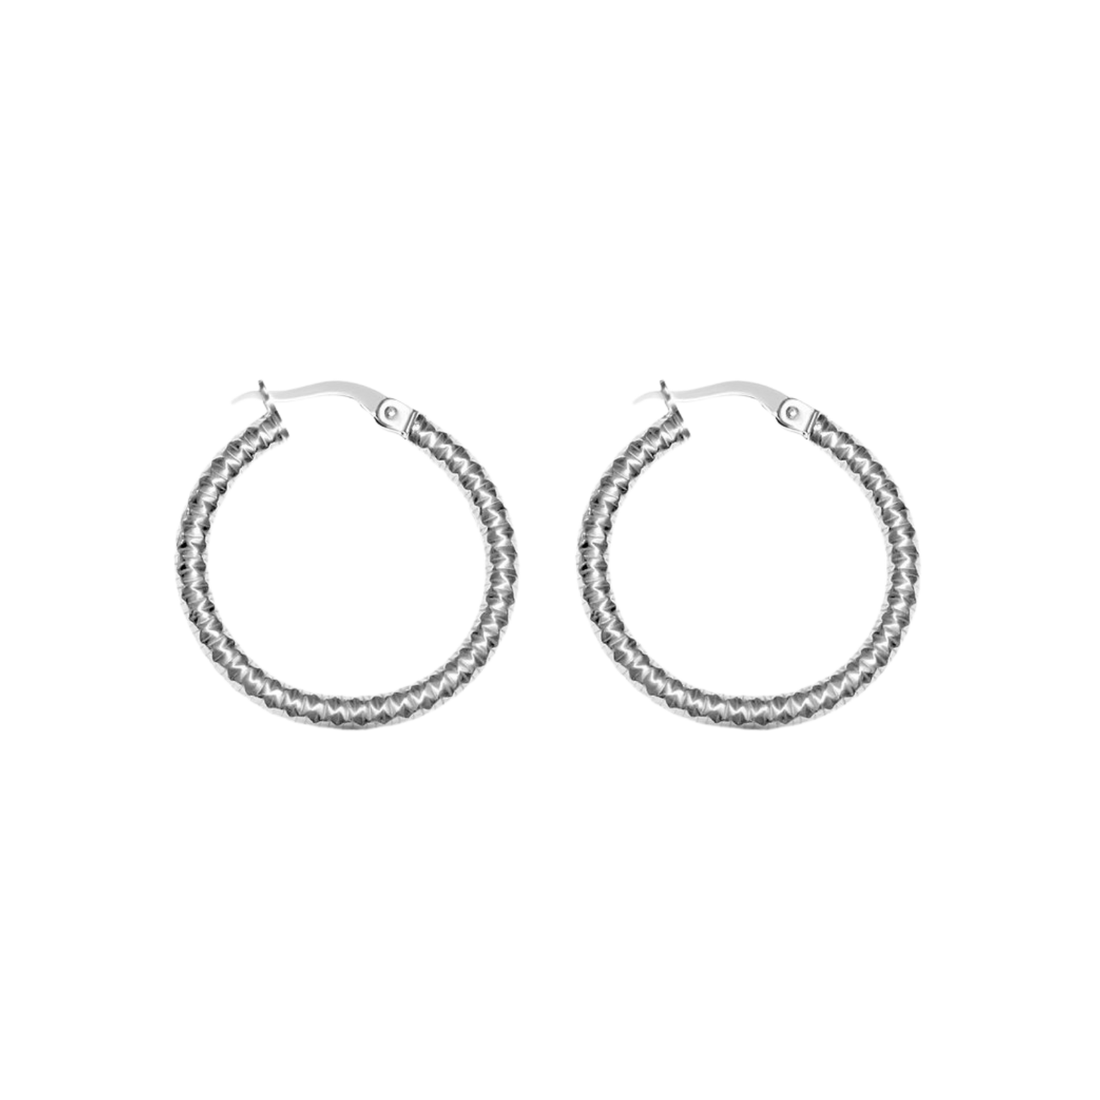 large chunky silver hoops earrings canada, silver hoop earrings toronto, sterling silver hoop earrings amazon